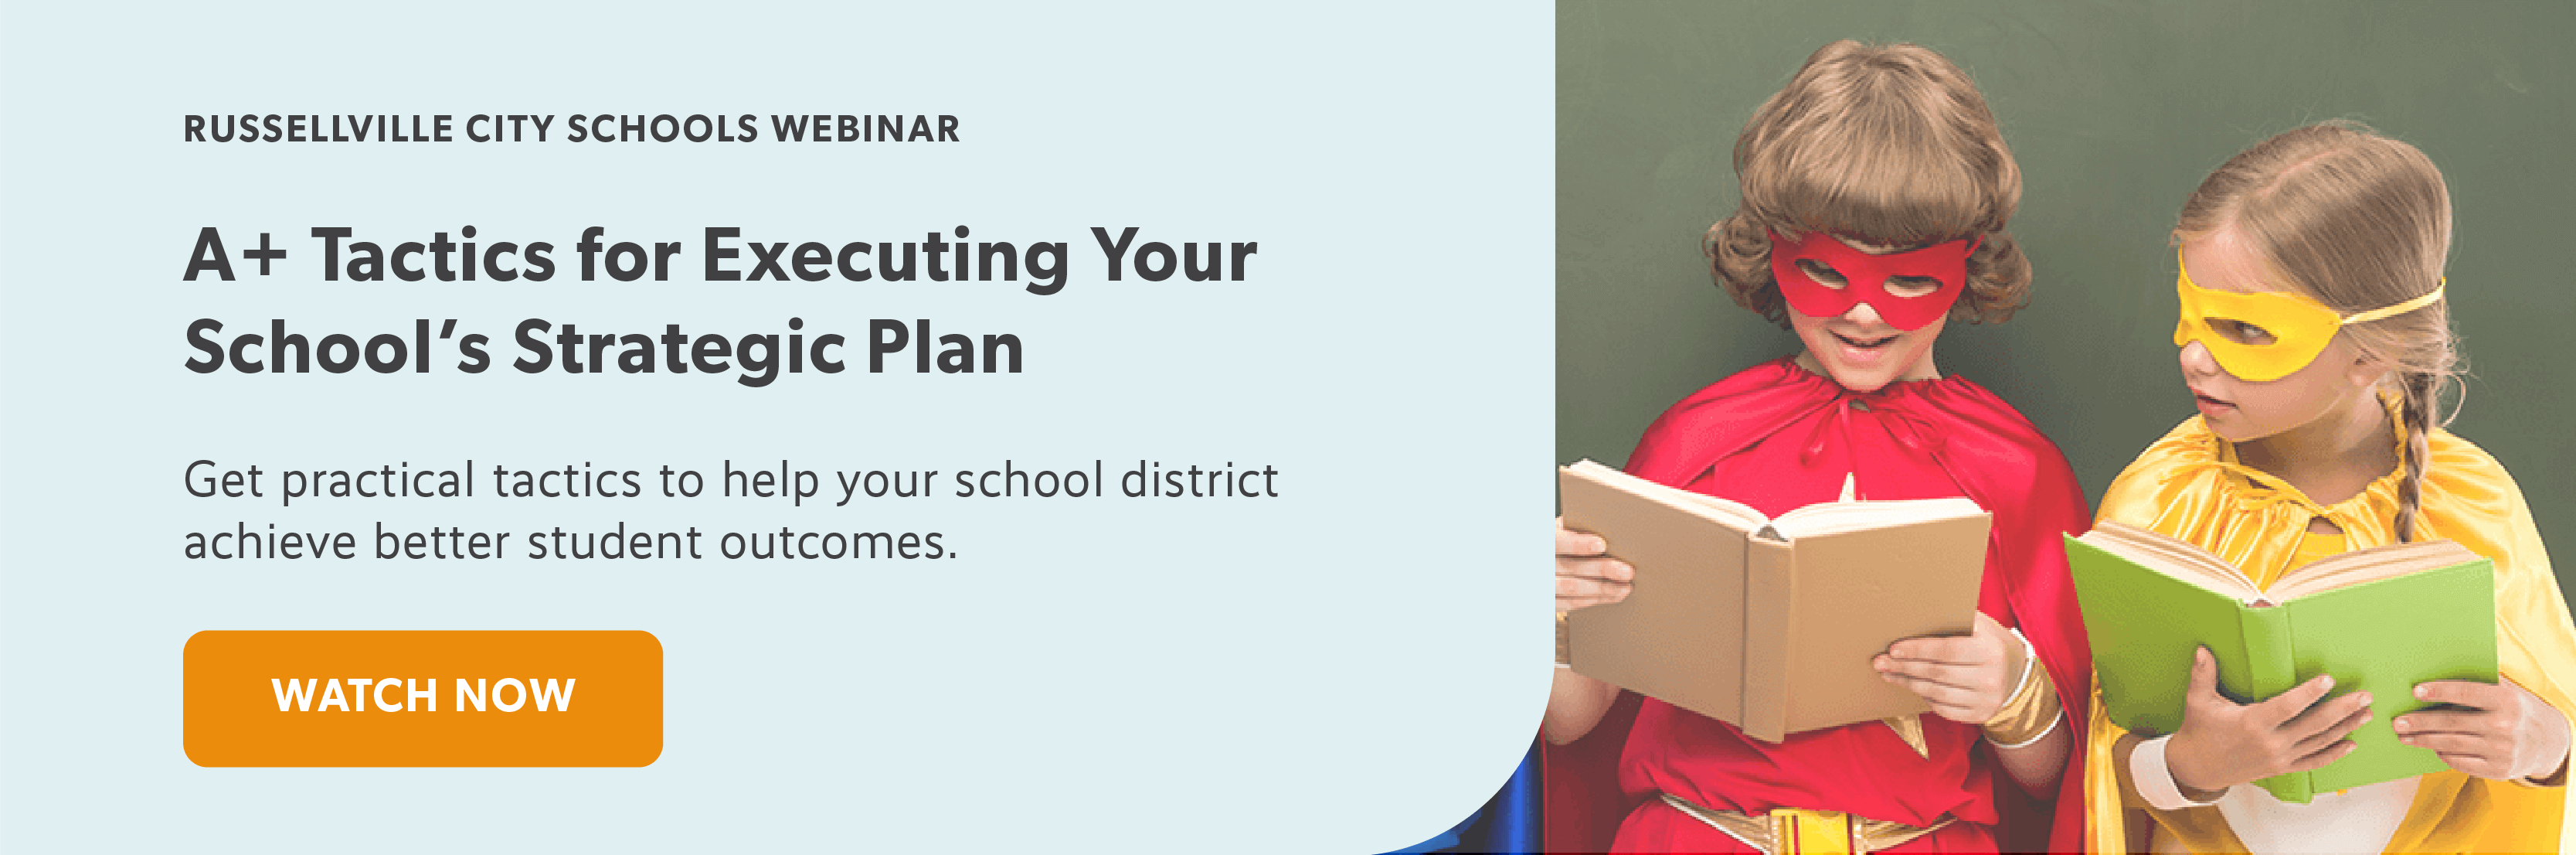 Tactics for Executing Your School Strategic Plan